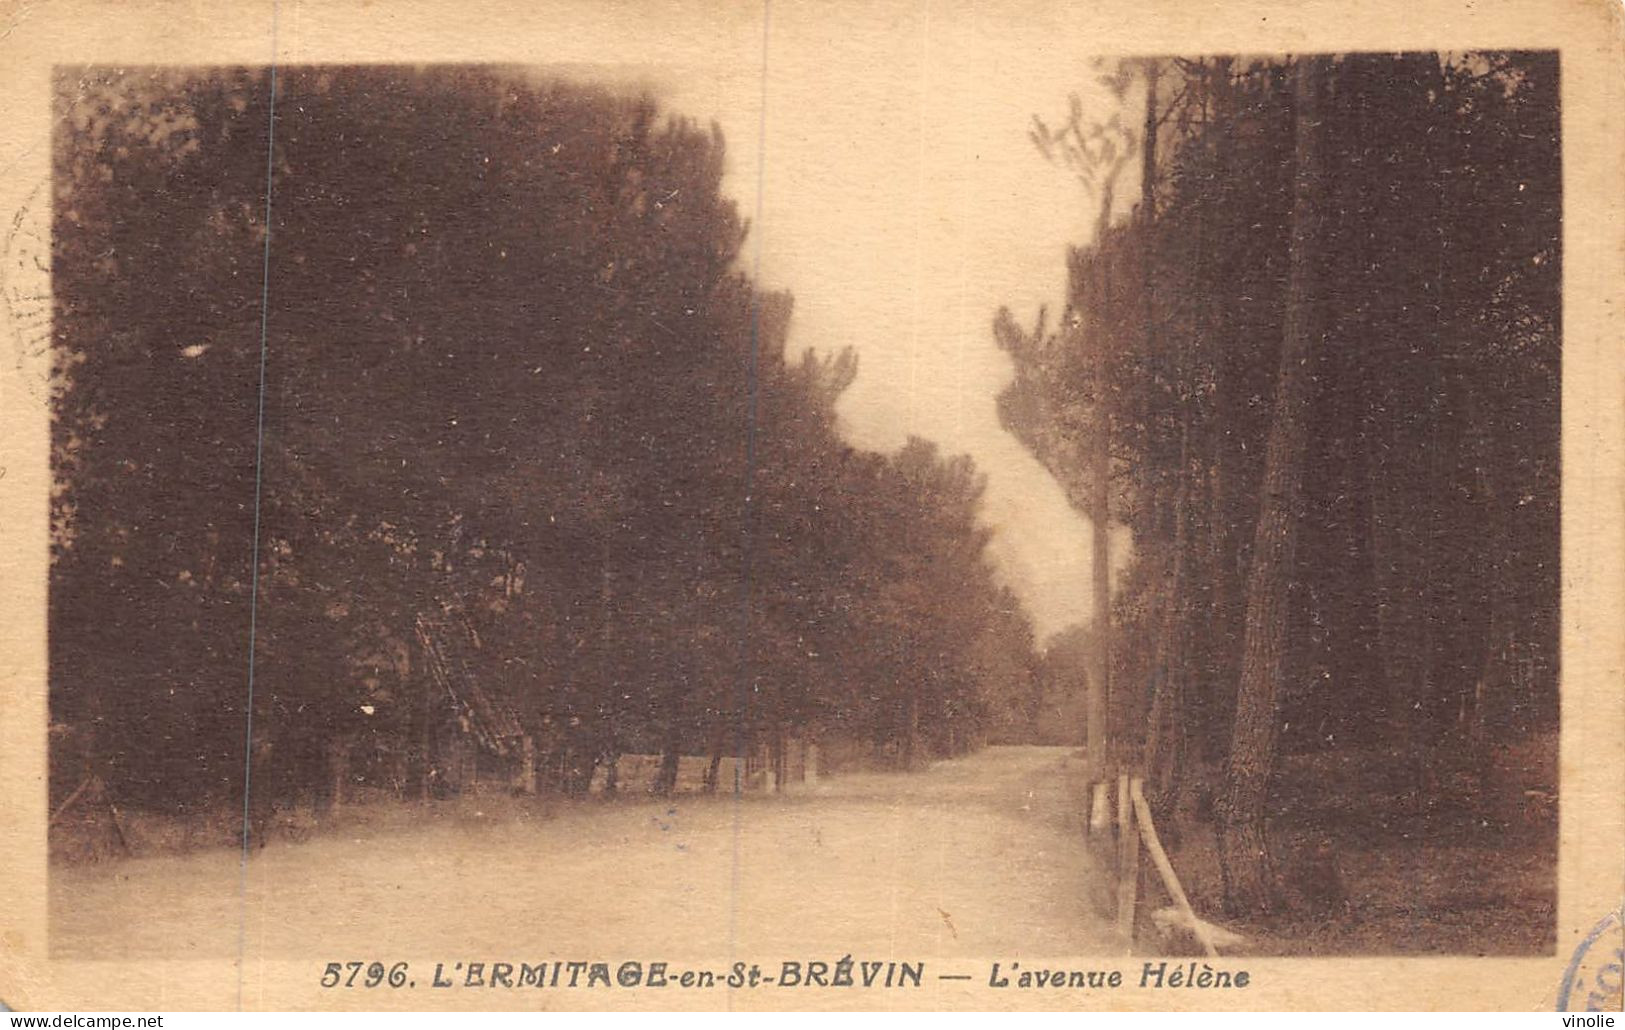 24-5431 : SAINT-BREVIN. L'ERMITAGE. EDITION RIVIERE-BUREAU A PONS N° 5796 - Saint-Brevin-les-Pins